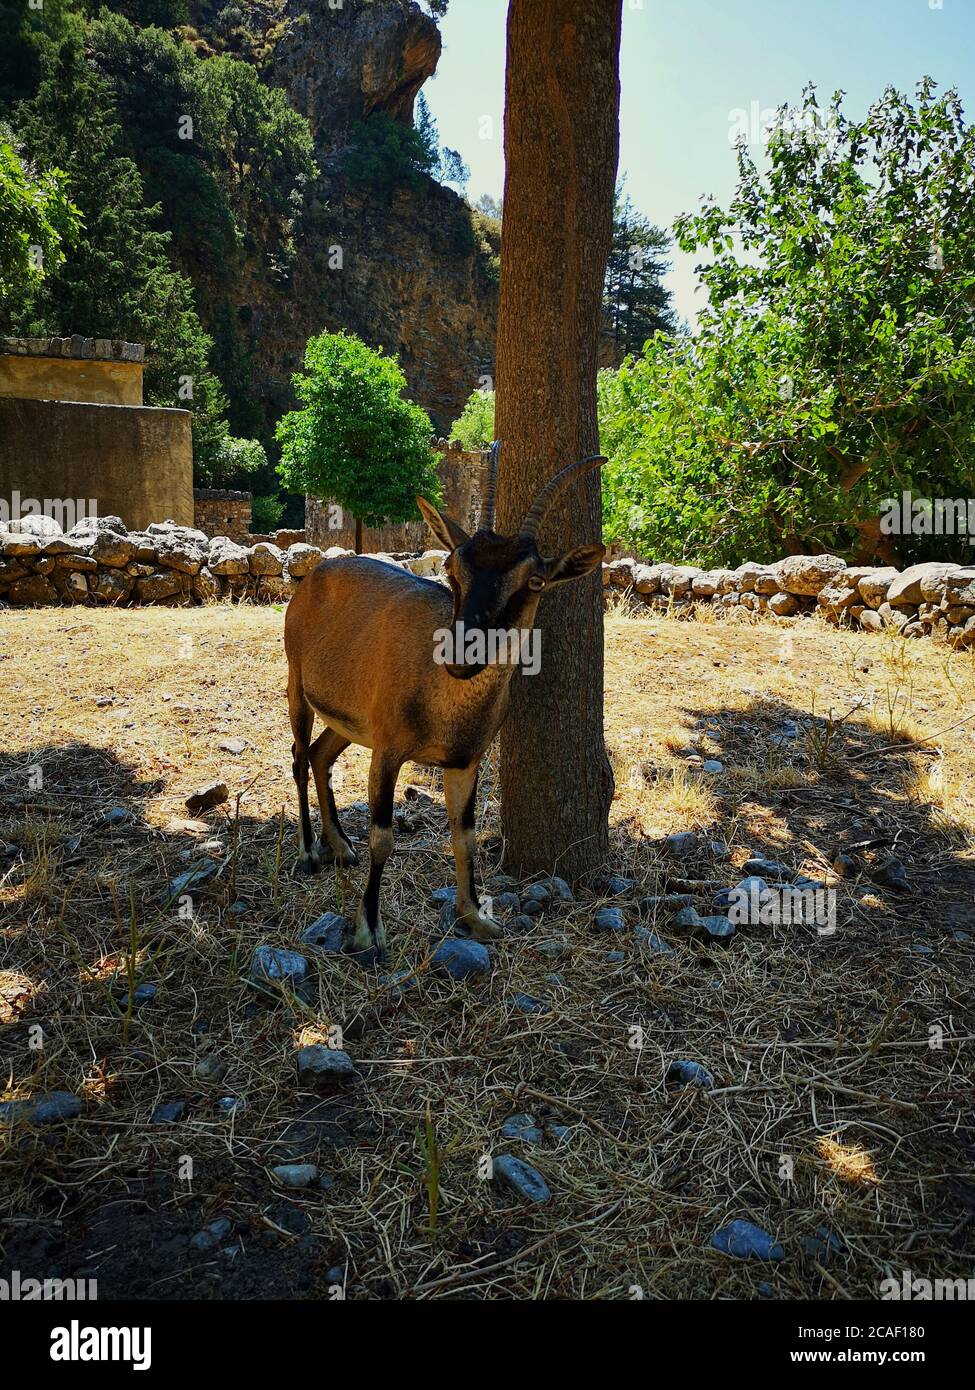 The rare and strange Kiri-kiri goat that is unique to Crete, standing under a tree Stock Photo